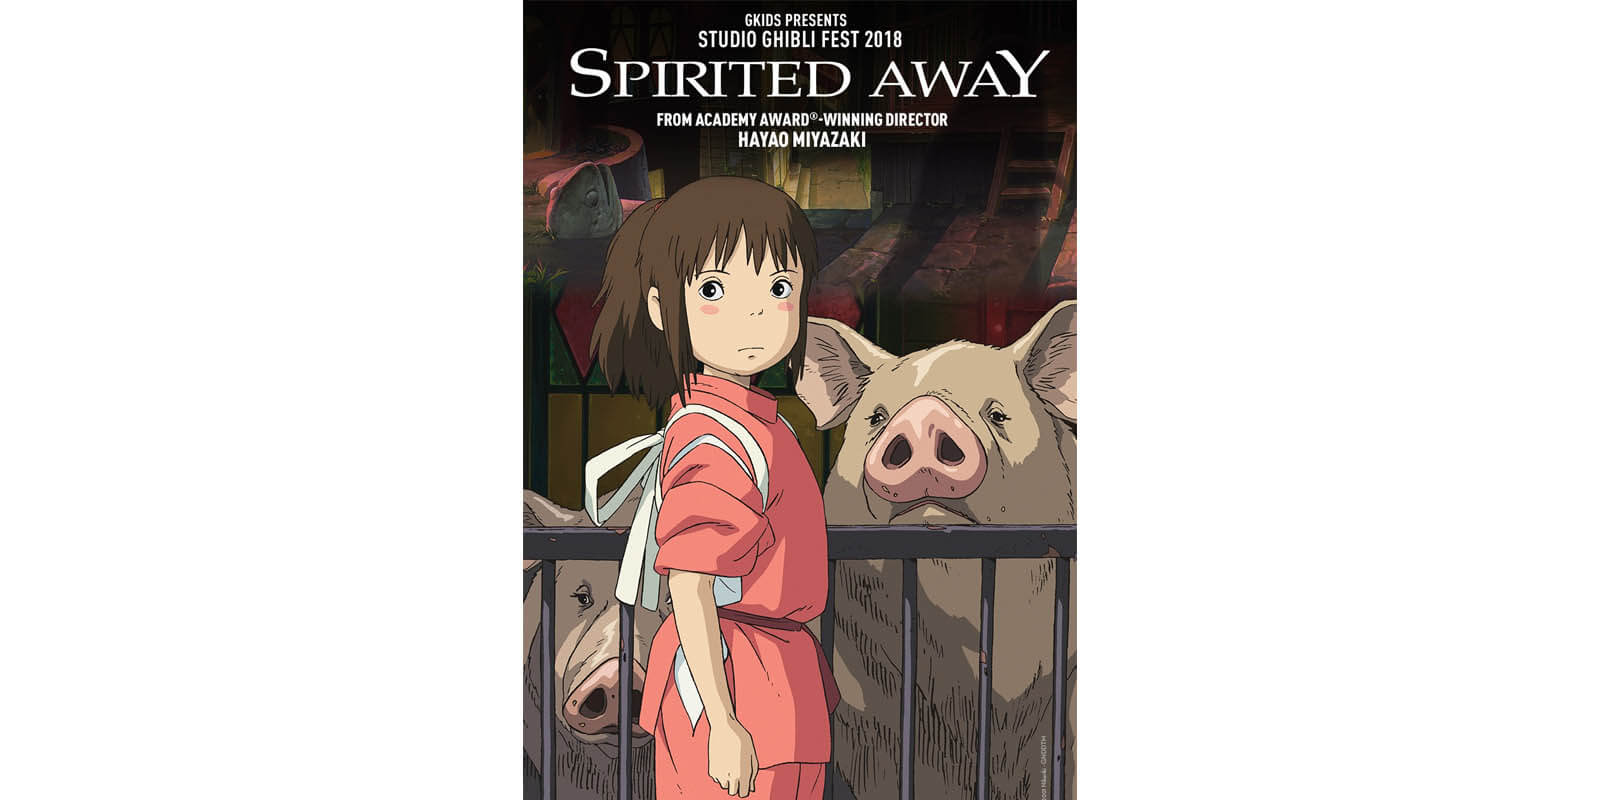 Spirited Away (Studio Ghibli Fest 2018)